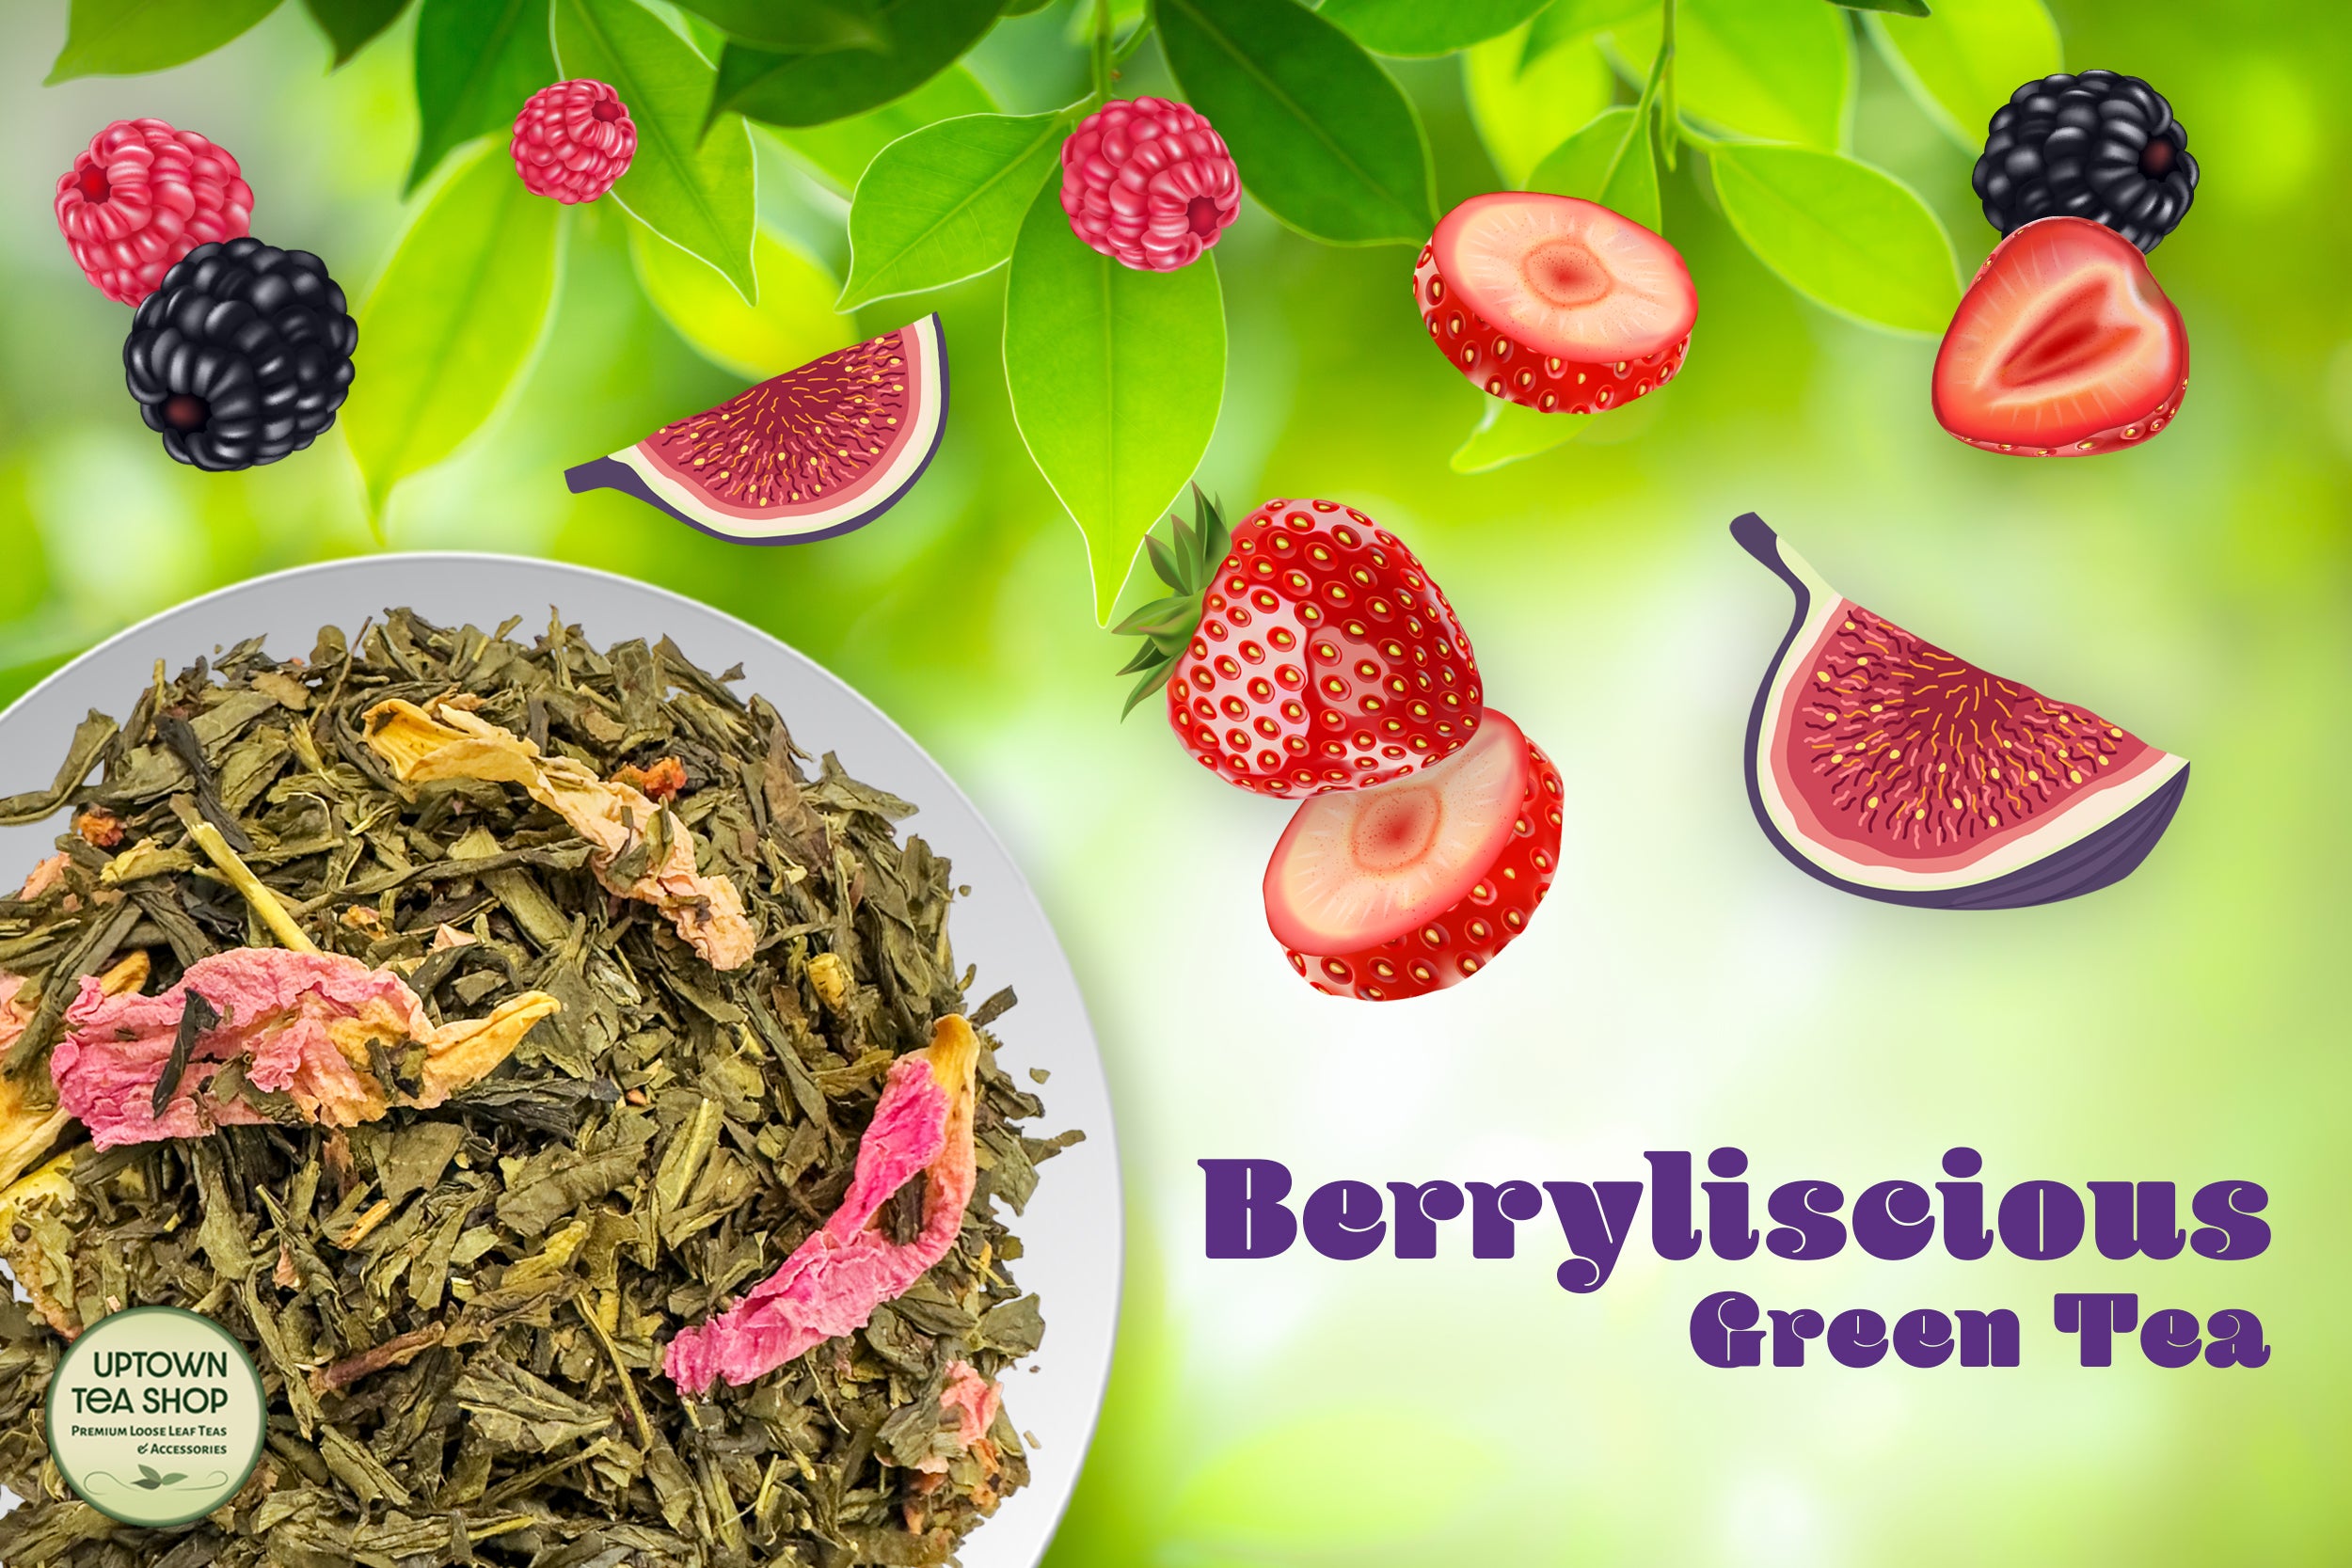 Berryliscious Green Tea